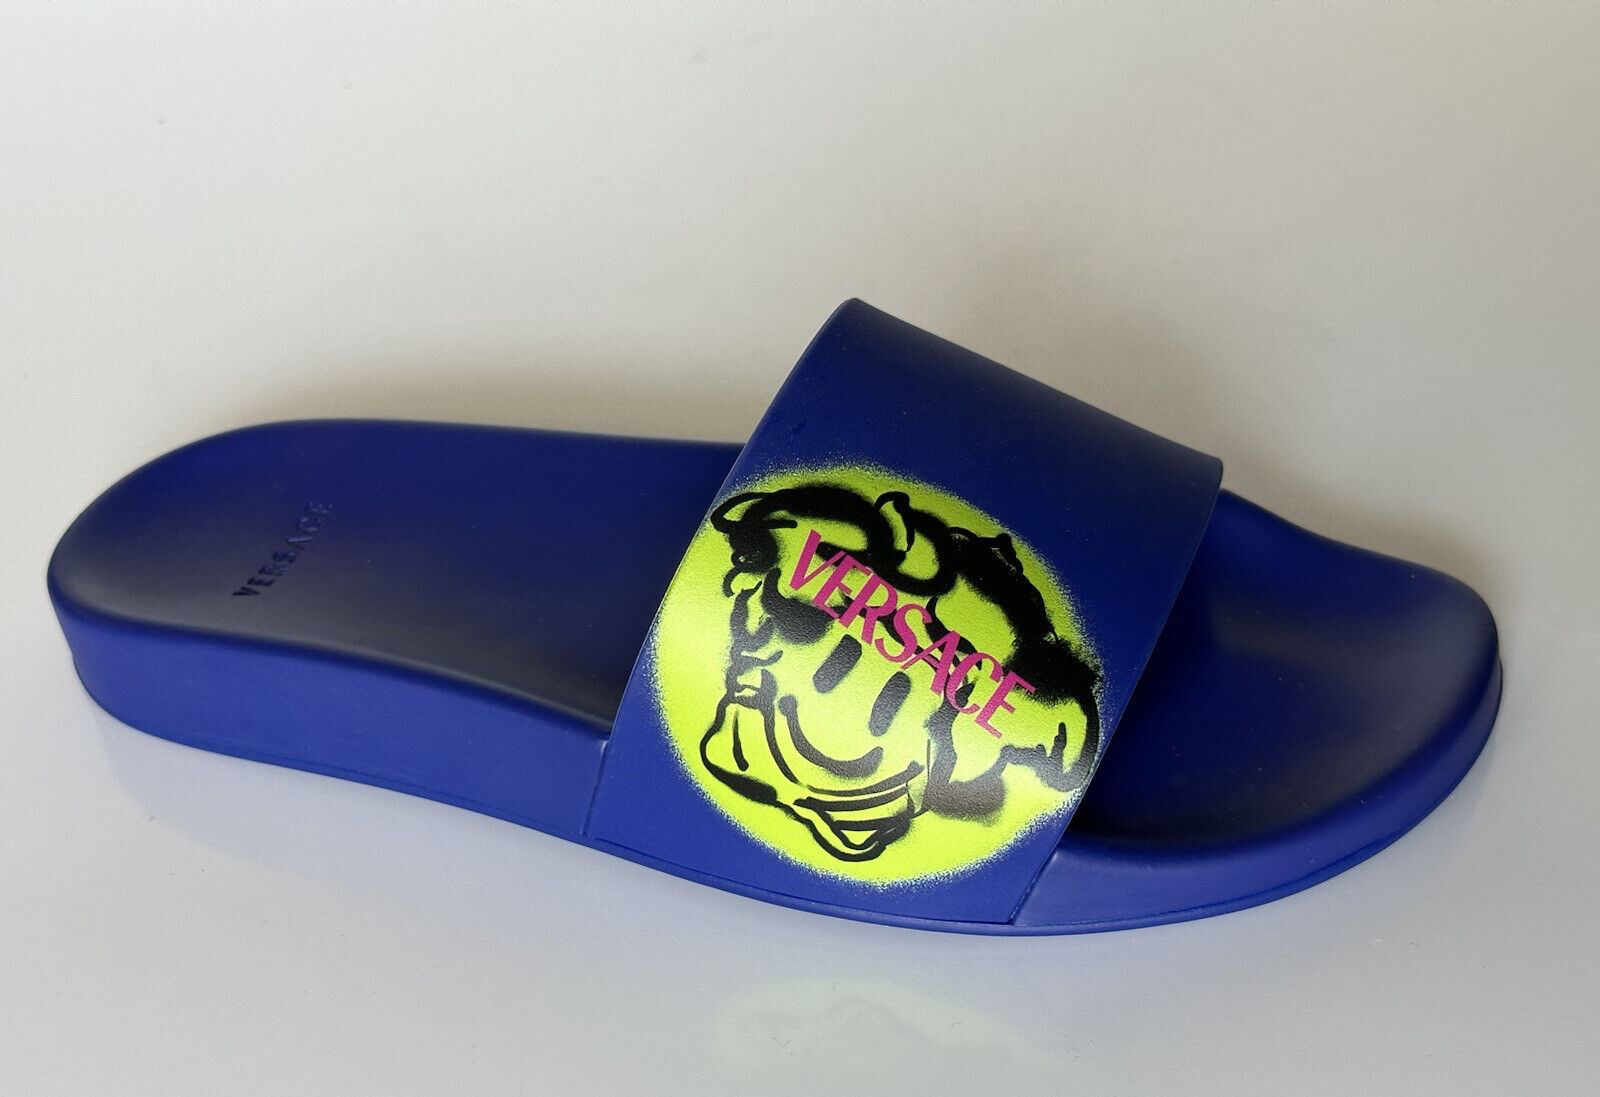 NIB $ 450 Versace Smiley Medusa Slides Sandalen Blau/Limette 10 US (43 Eu) DSU6516 IT 